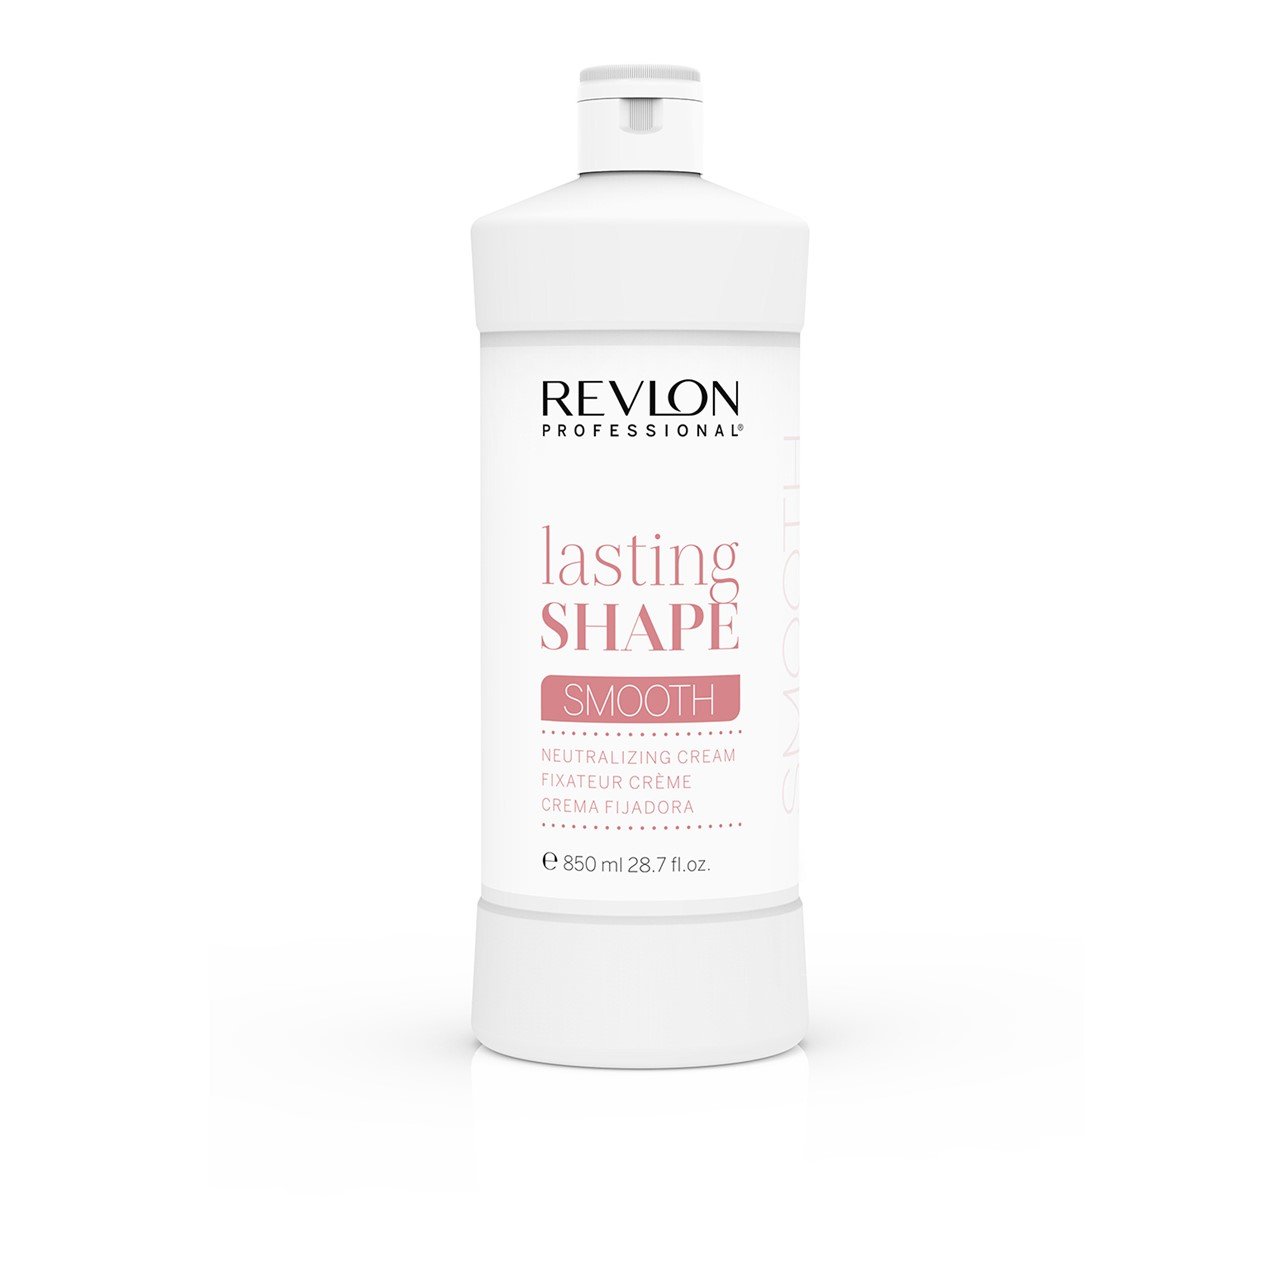 Revlon Professional Lasting Shape Smooth Neutralizing Cream 850ml (28.74fl oz)